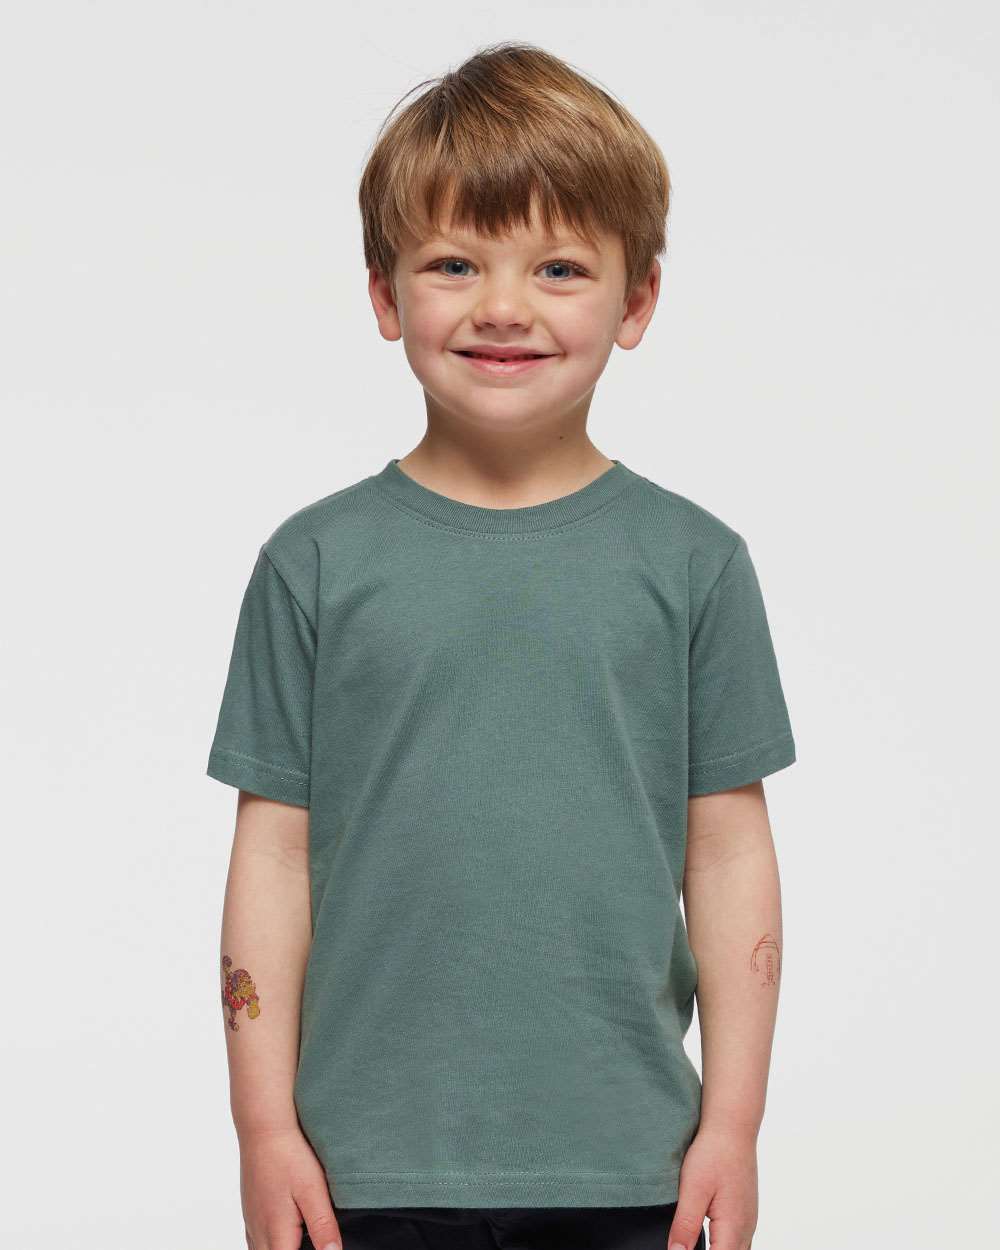 Rabbit Skins® Toddler Fine Jersey Tee Shirt For Adult